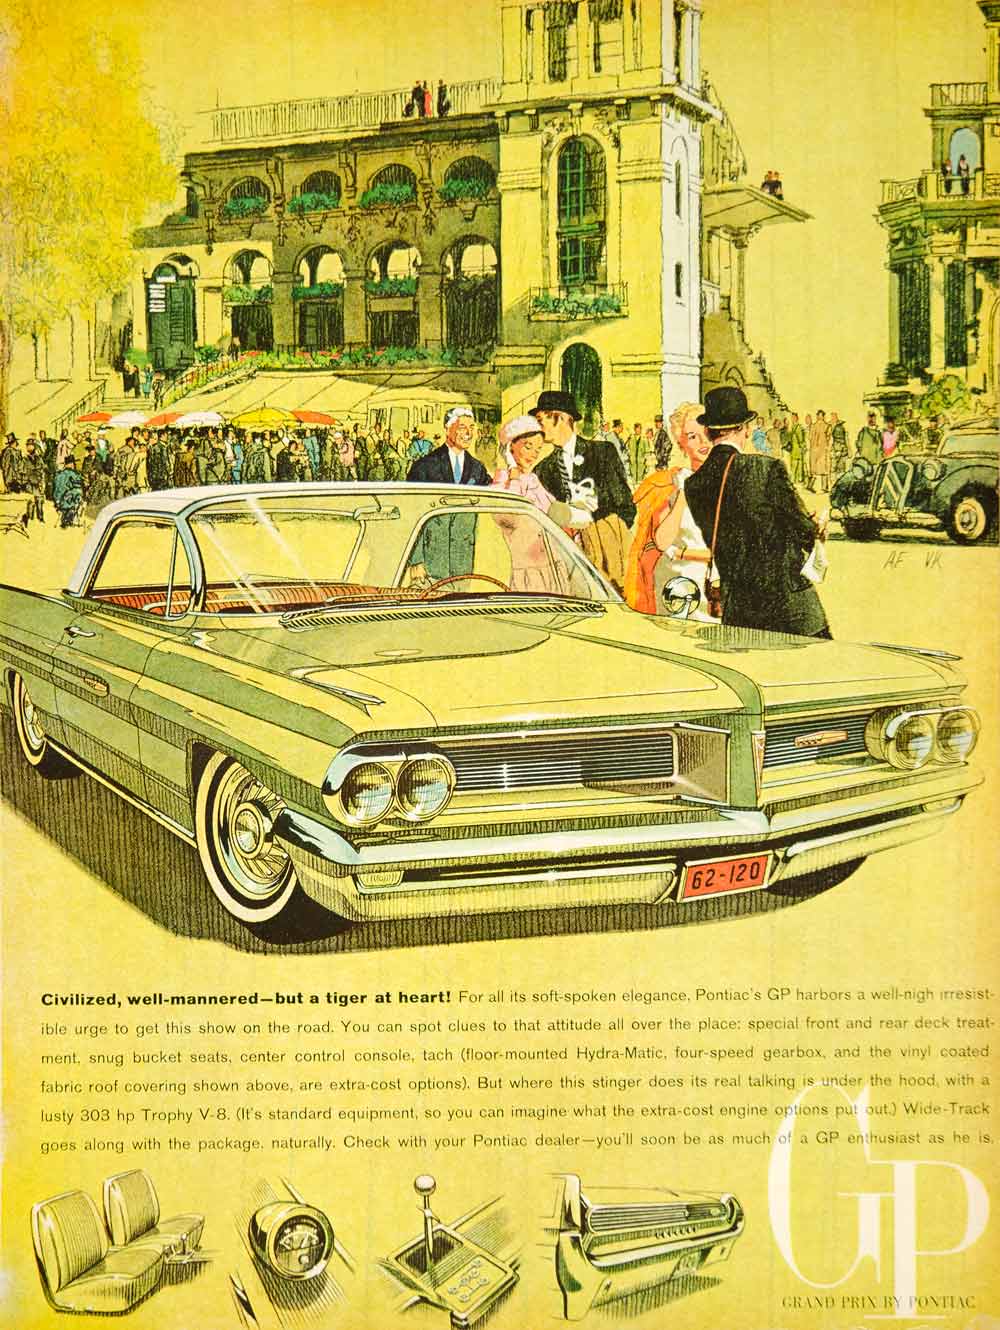 1962 Ad Vintage Pontiac Grand Prix GP Car Automobile 60s Fashion Bucket YMM5